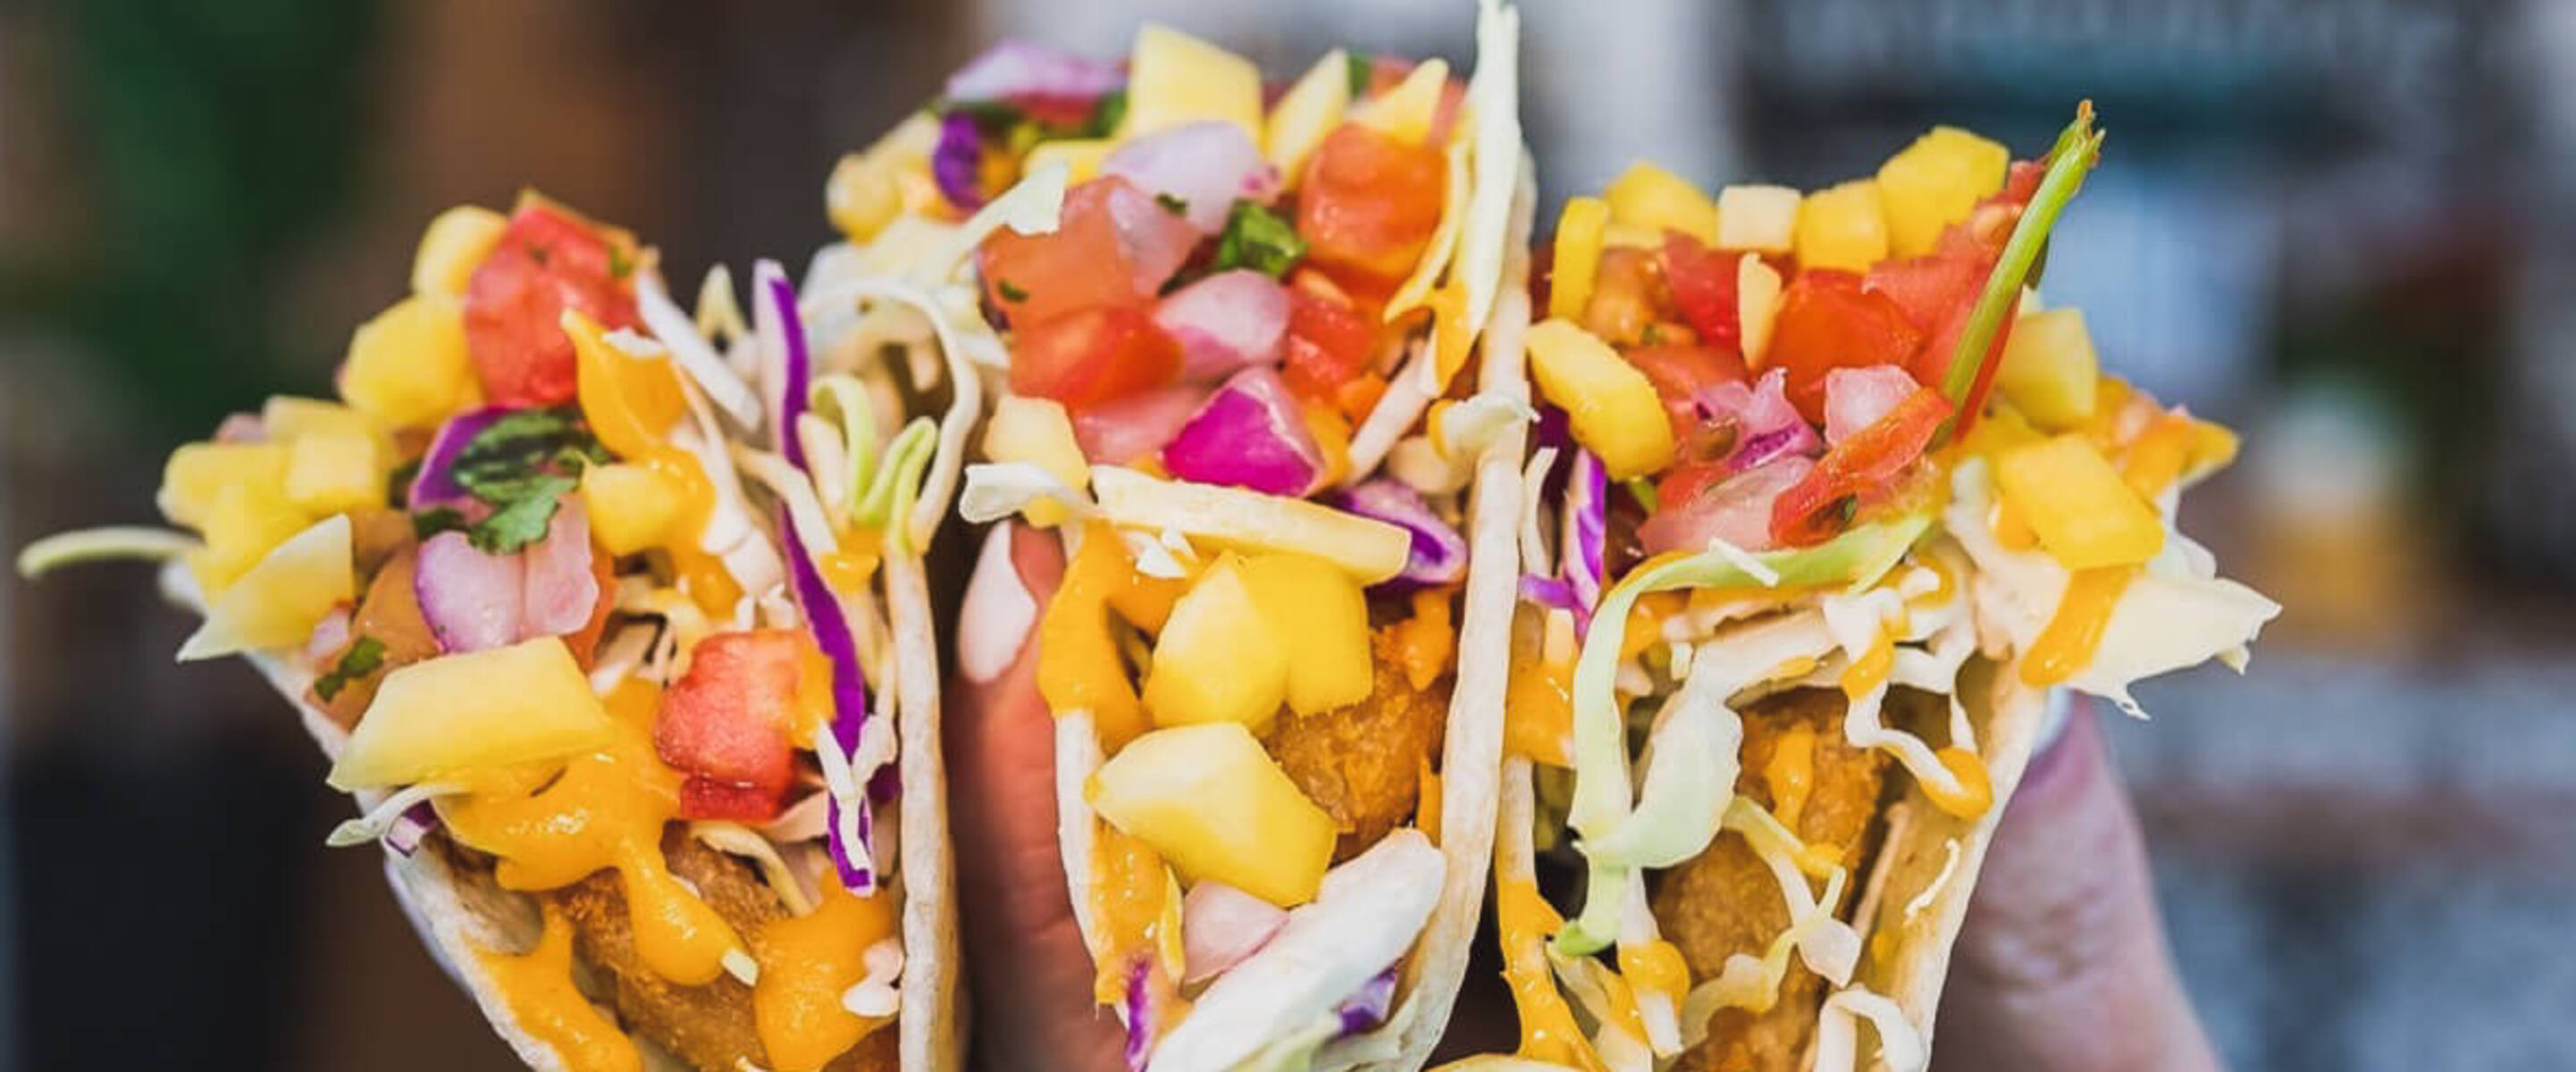 The 25 Best Vegan Mexican Food Spots Across the US&nbsp;